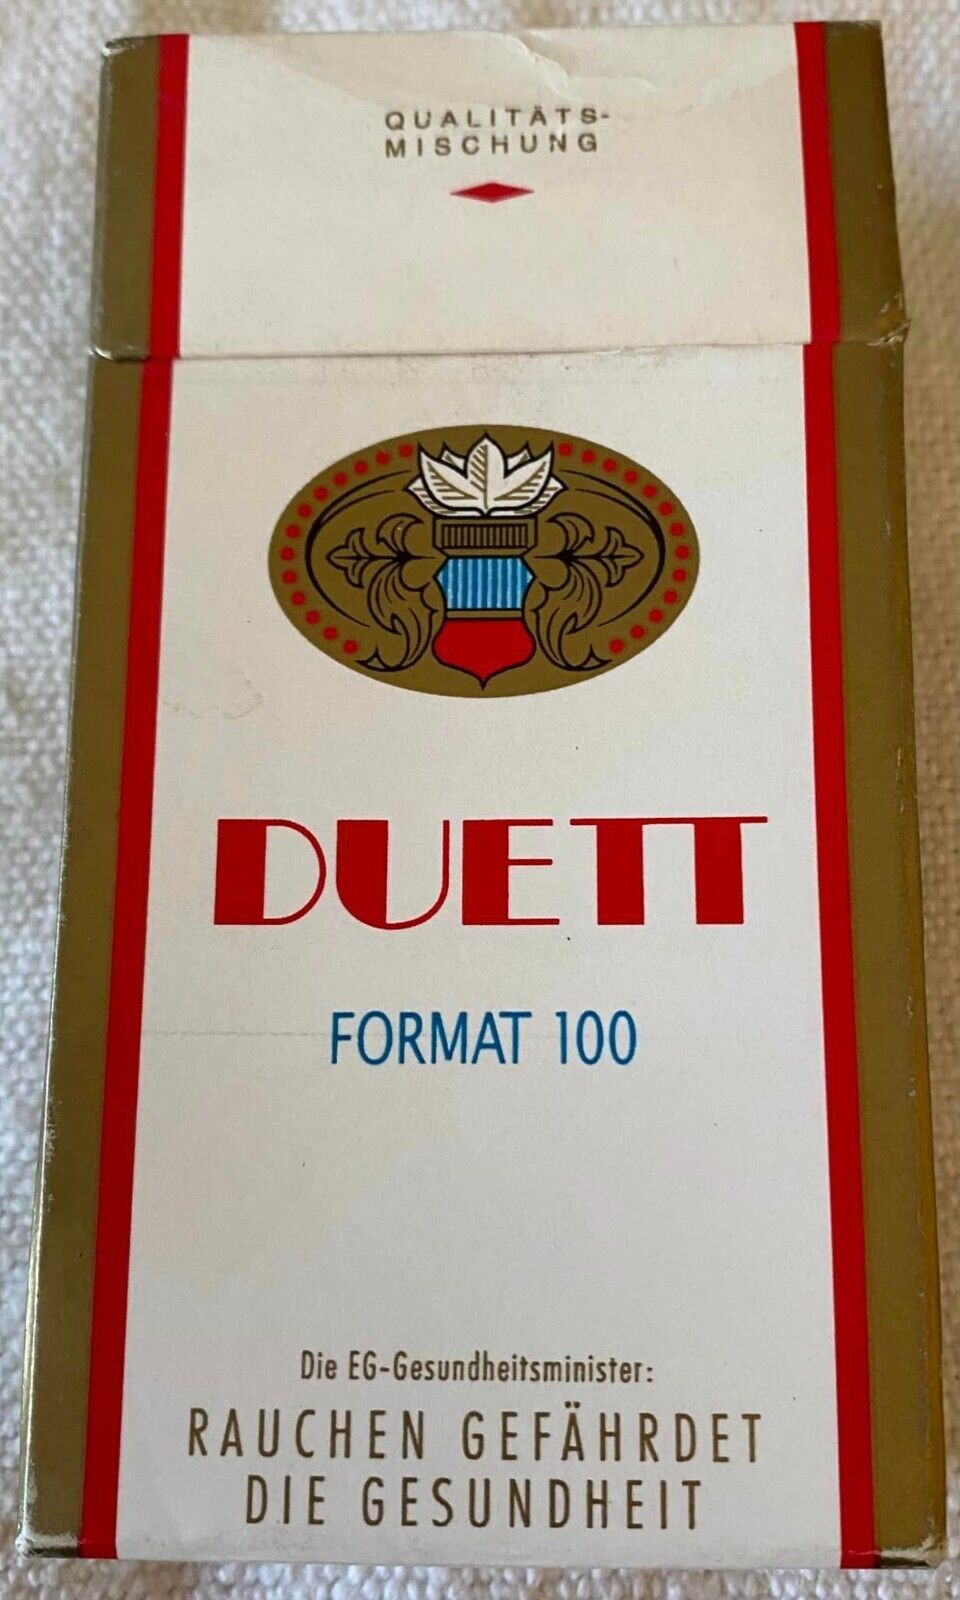 Vintage Duett Format 100 Extra Cigarette Cigarettes Cigarette Paper Box Empty